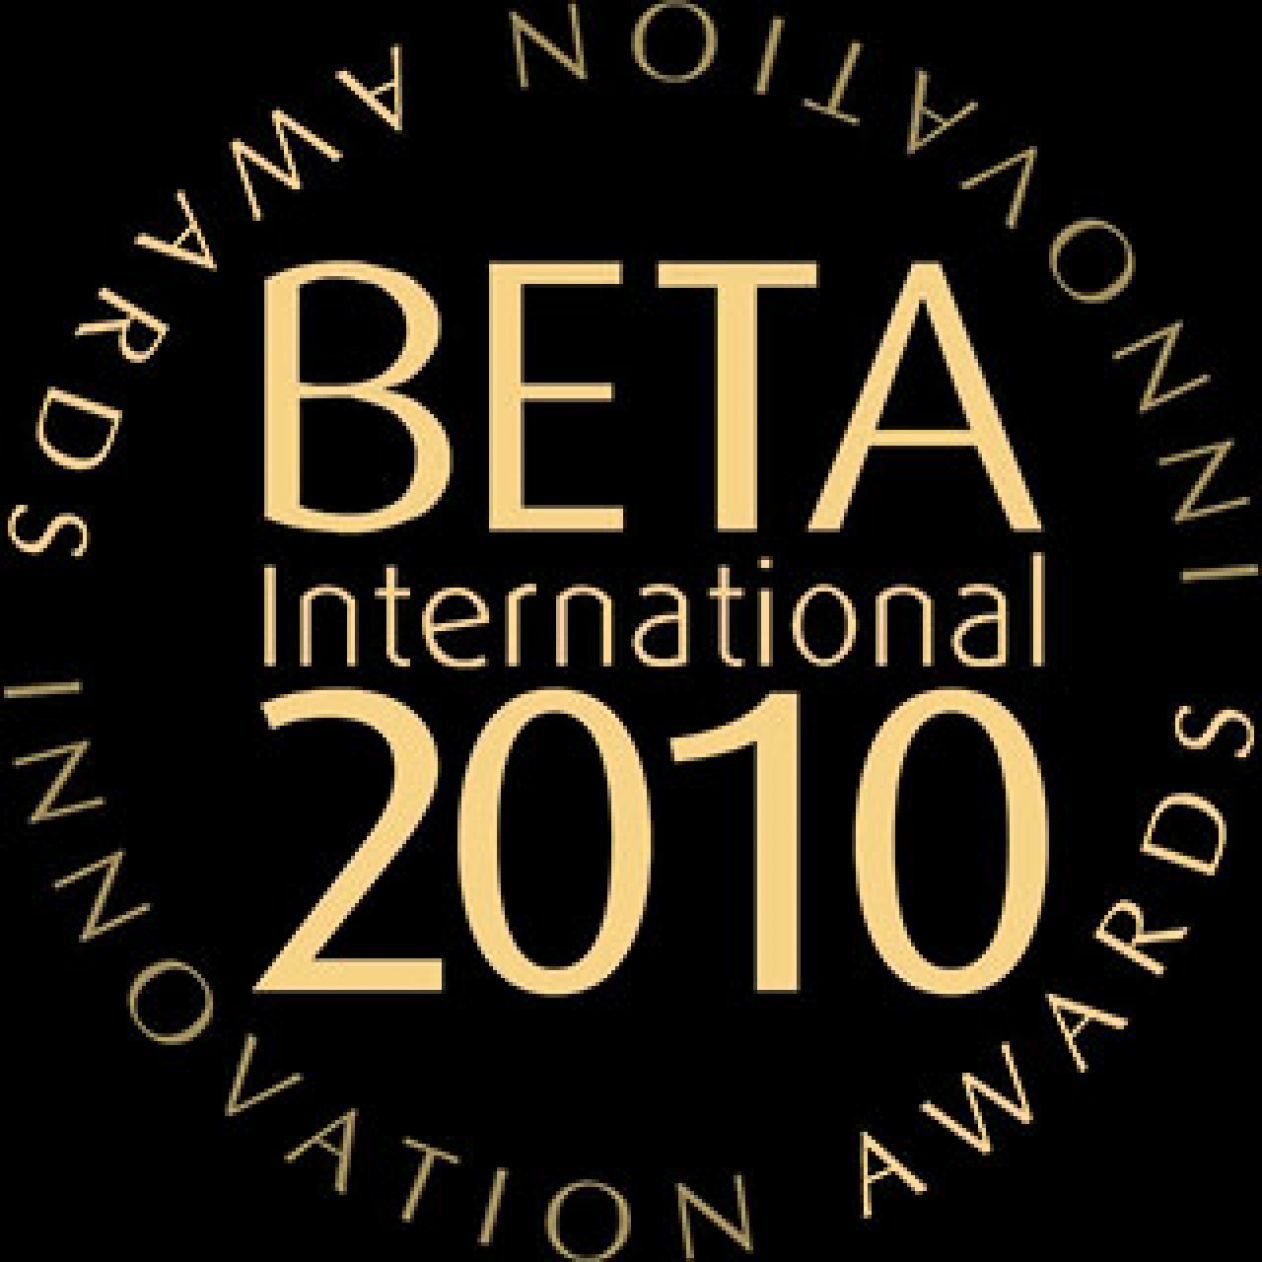 Beta 2010 award